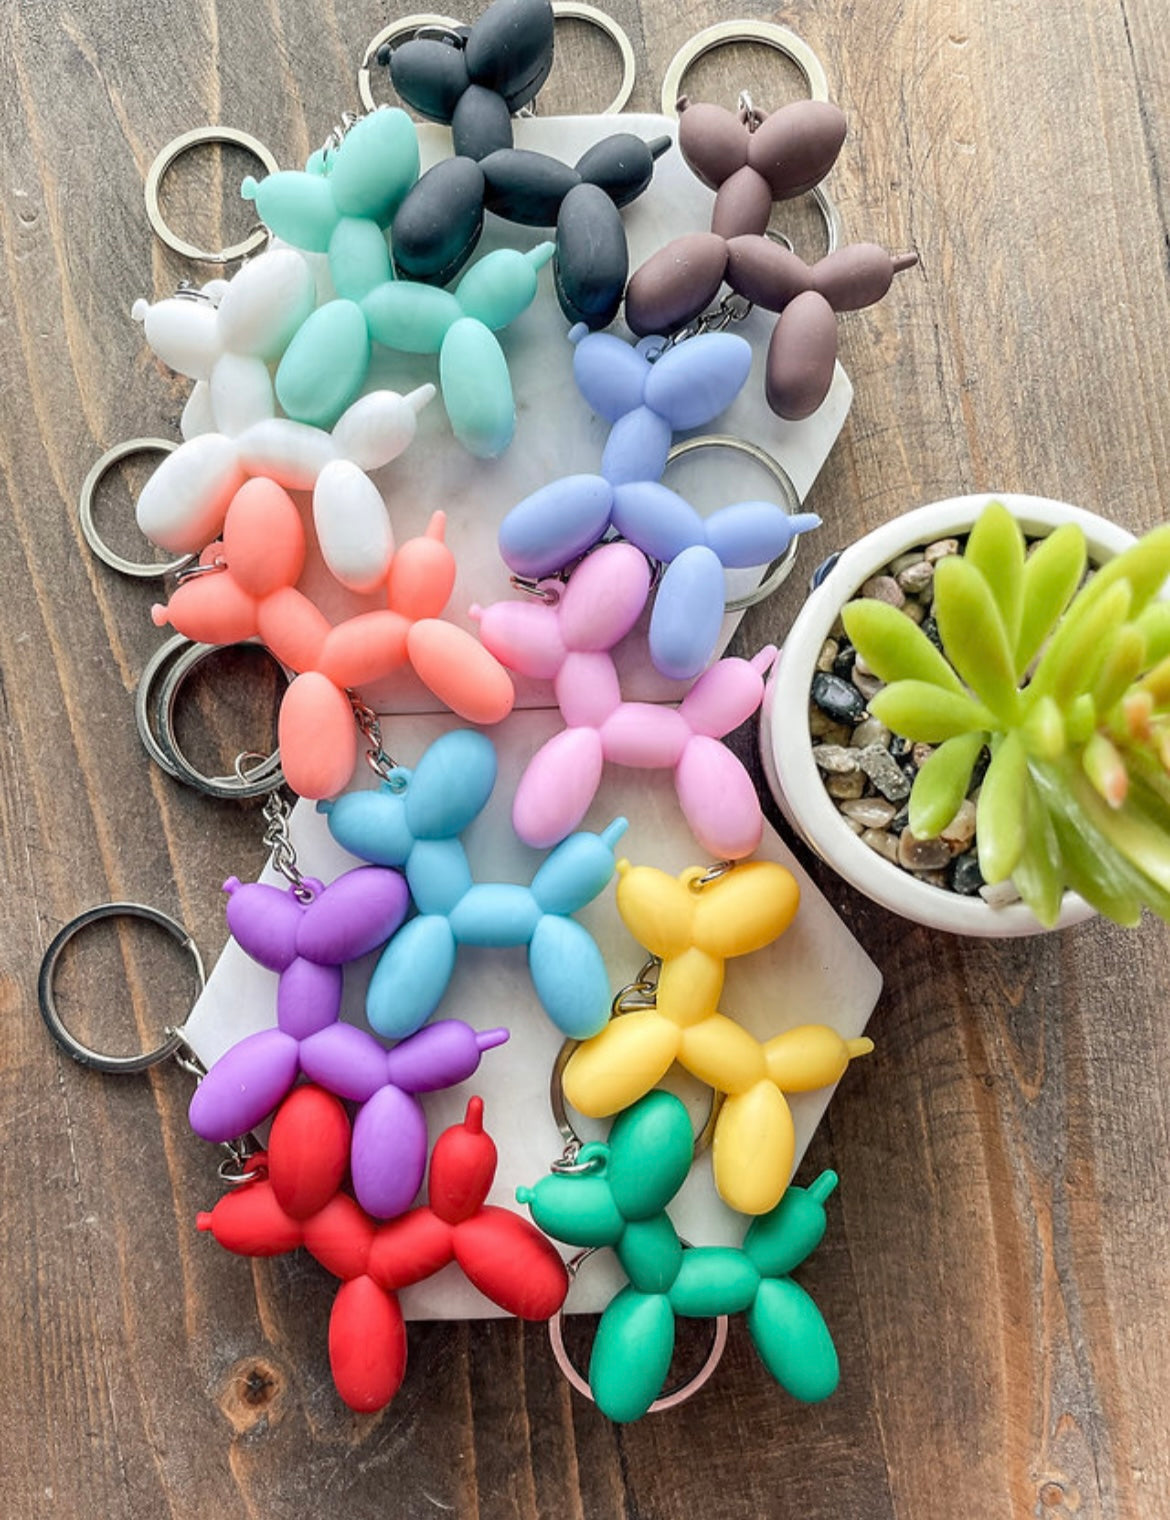 Balloon Dog Keychain - Bulk Quantity